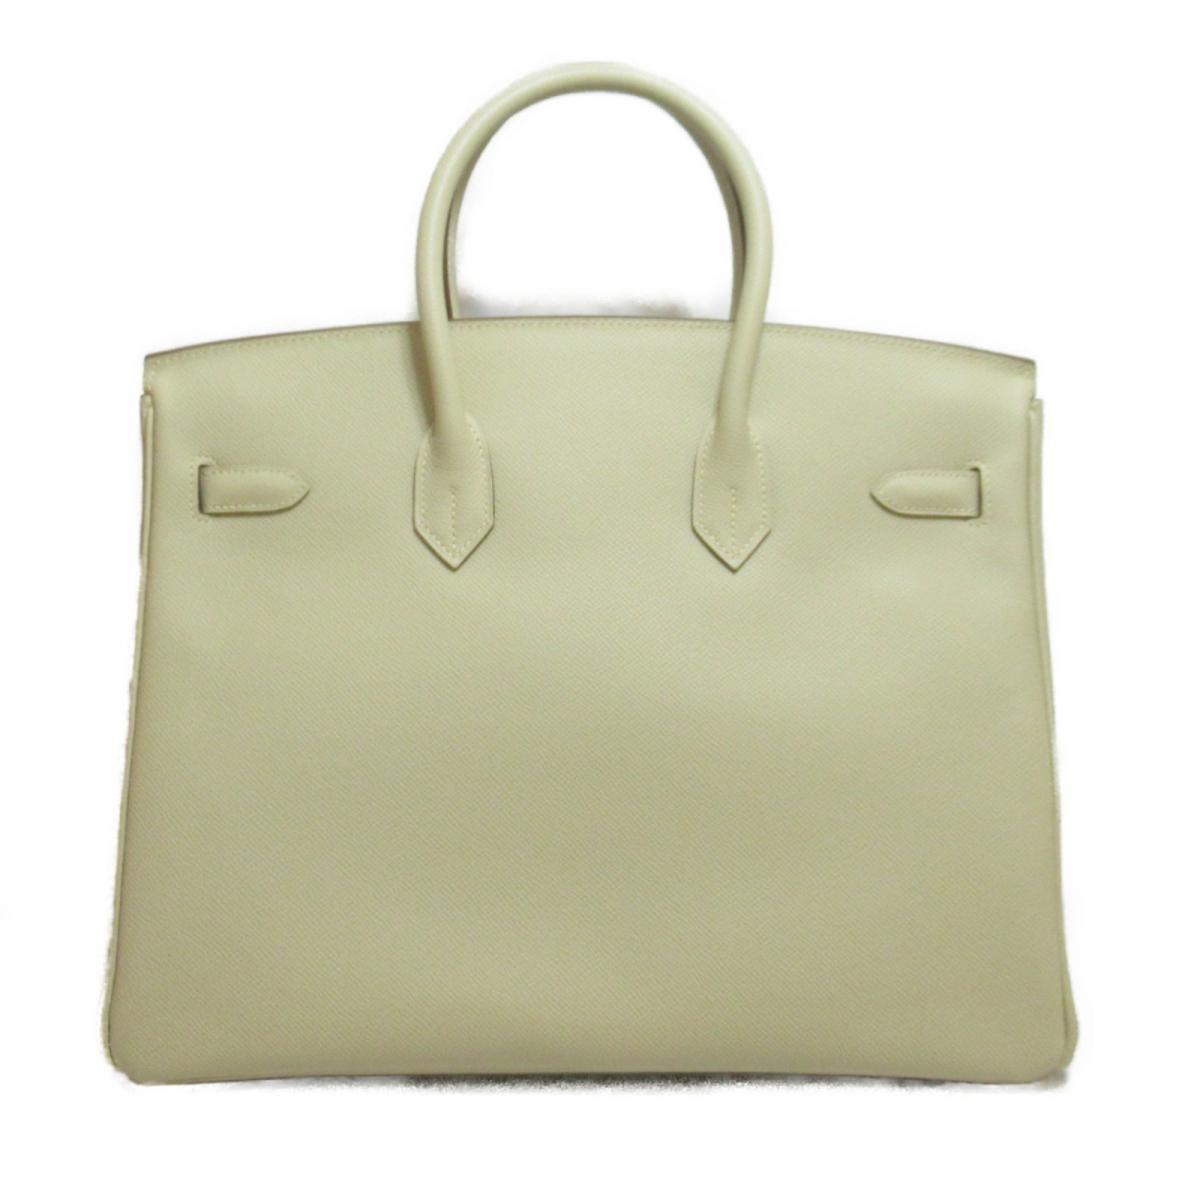 Hermes Birkin 35 Handbag